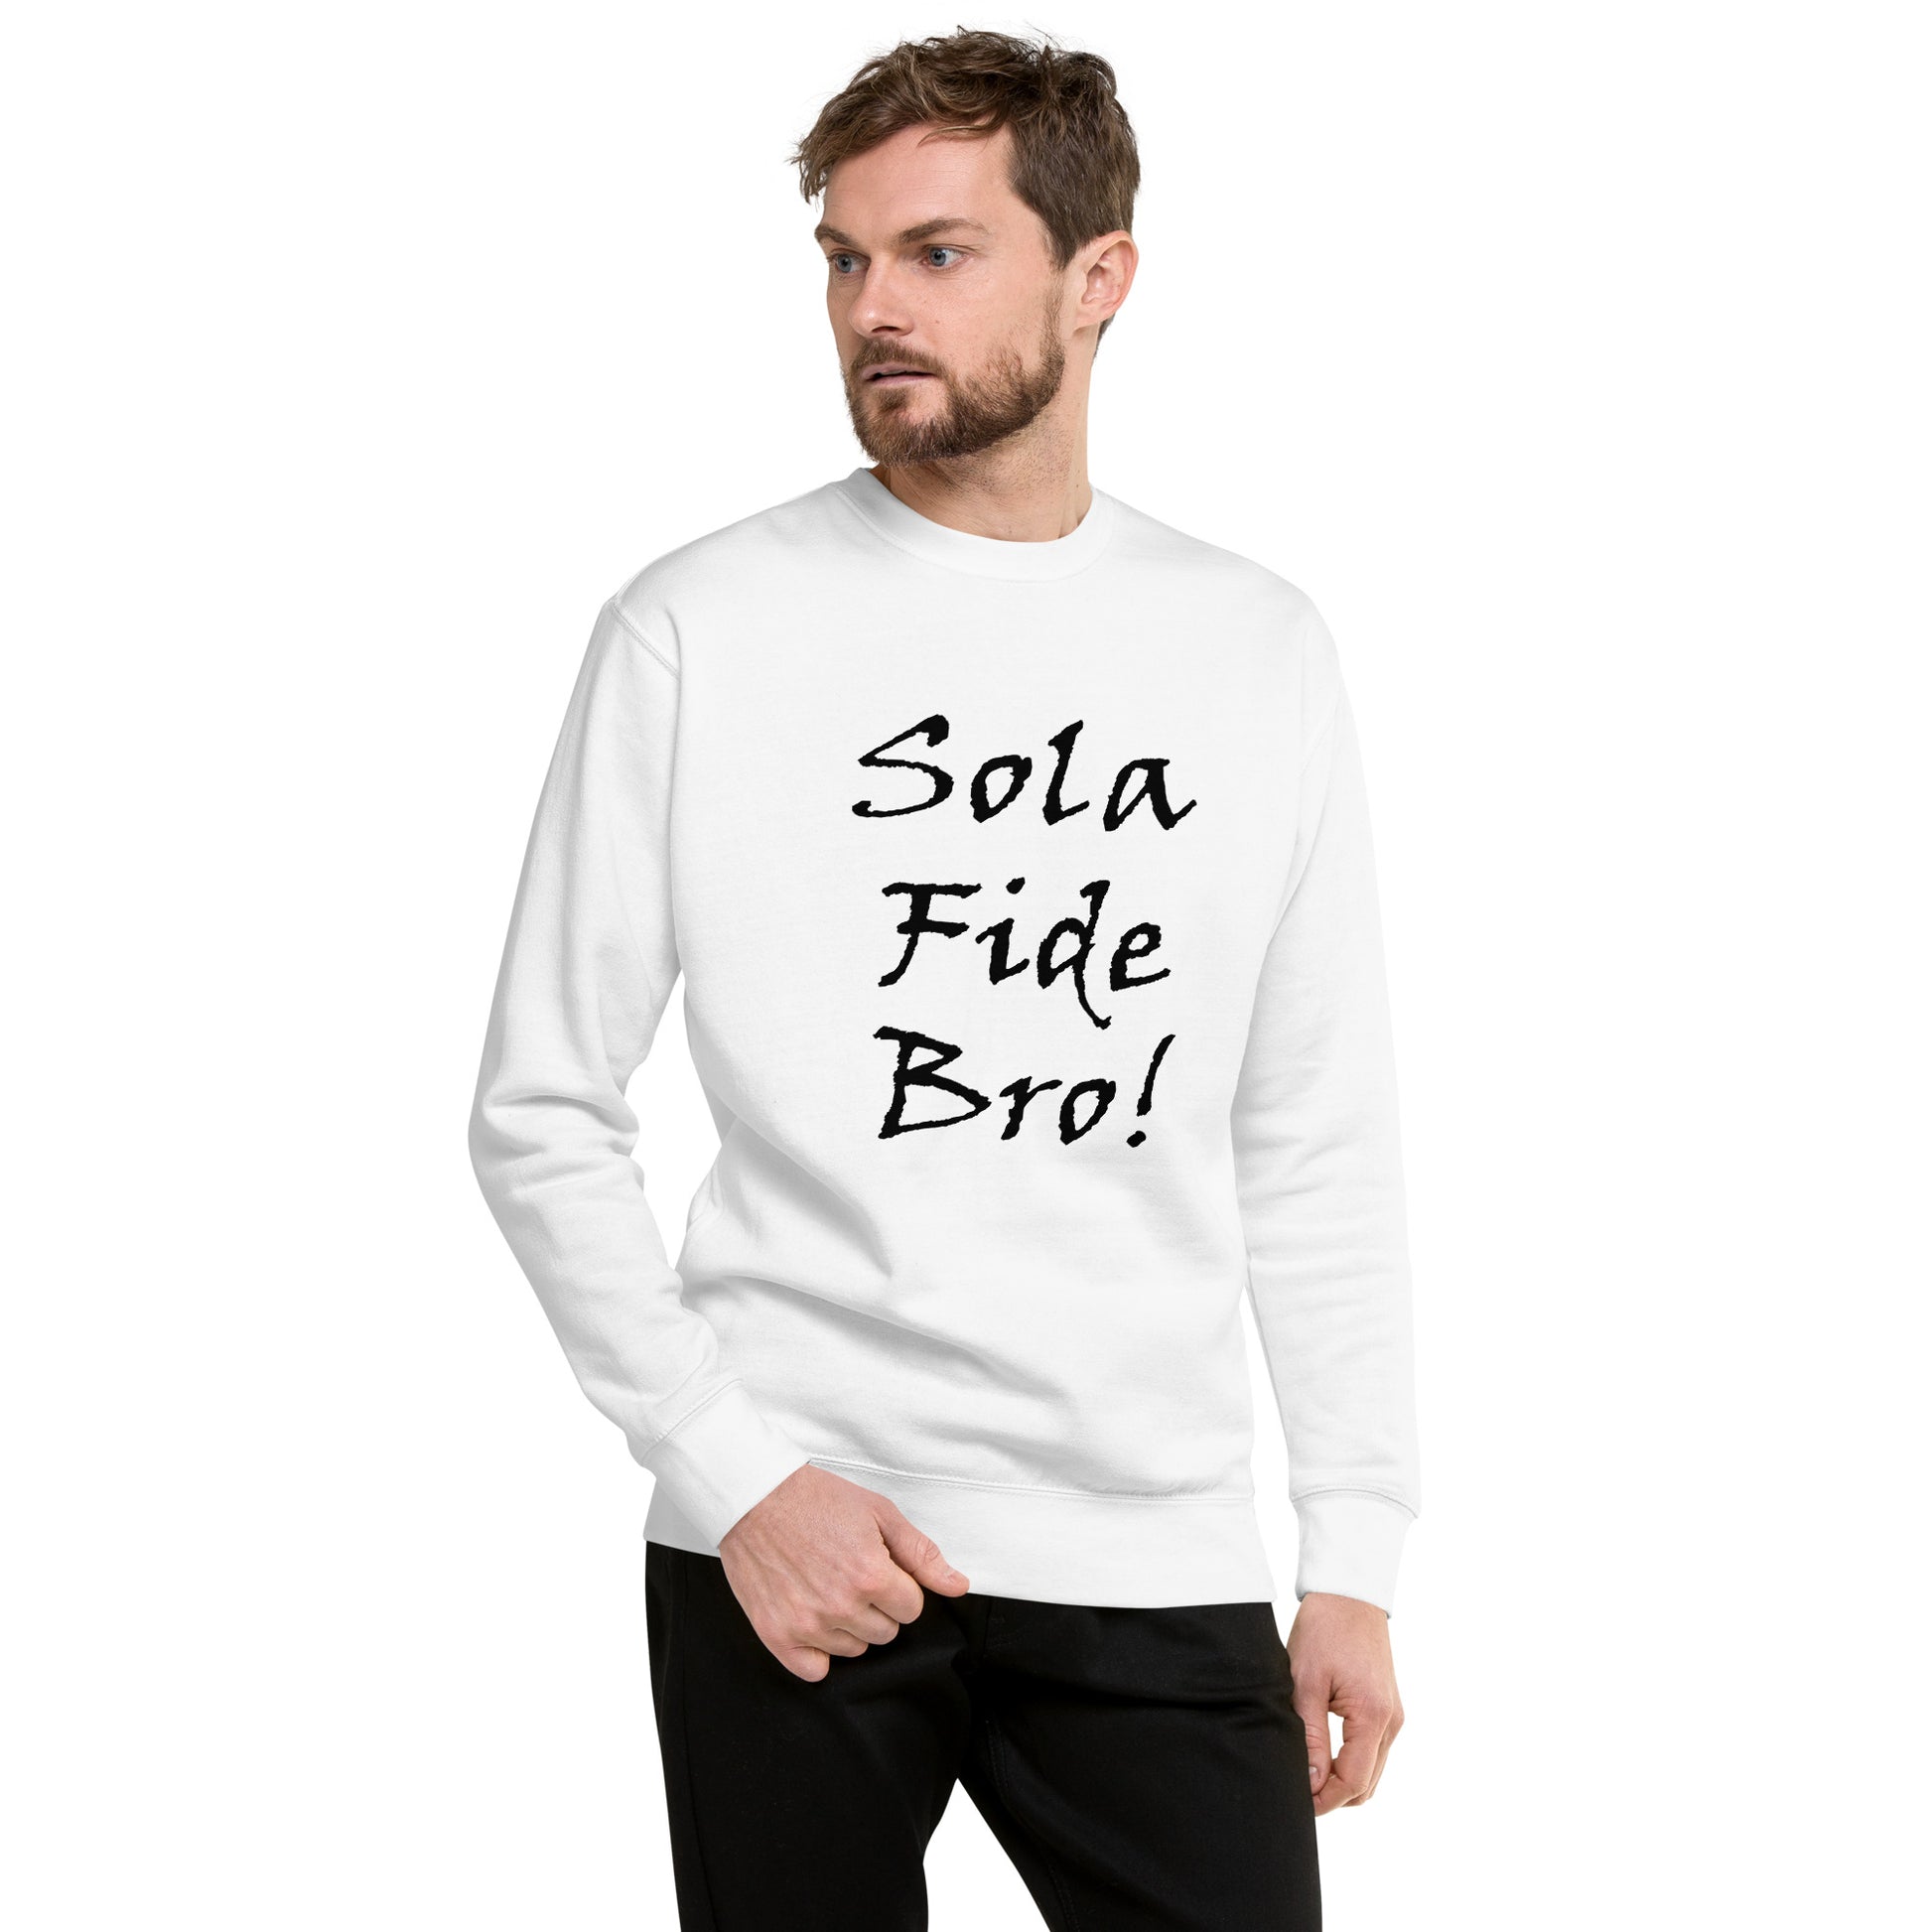 Sola Fida Bro! Unisex Sweatshirt - Solid Rock Designs | Christian Apparel